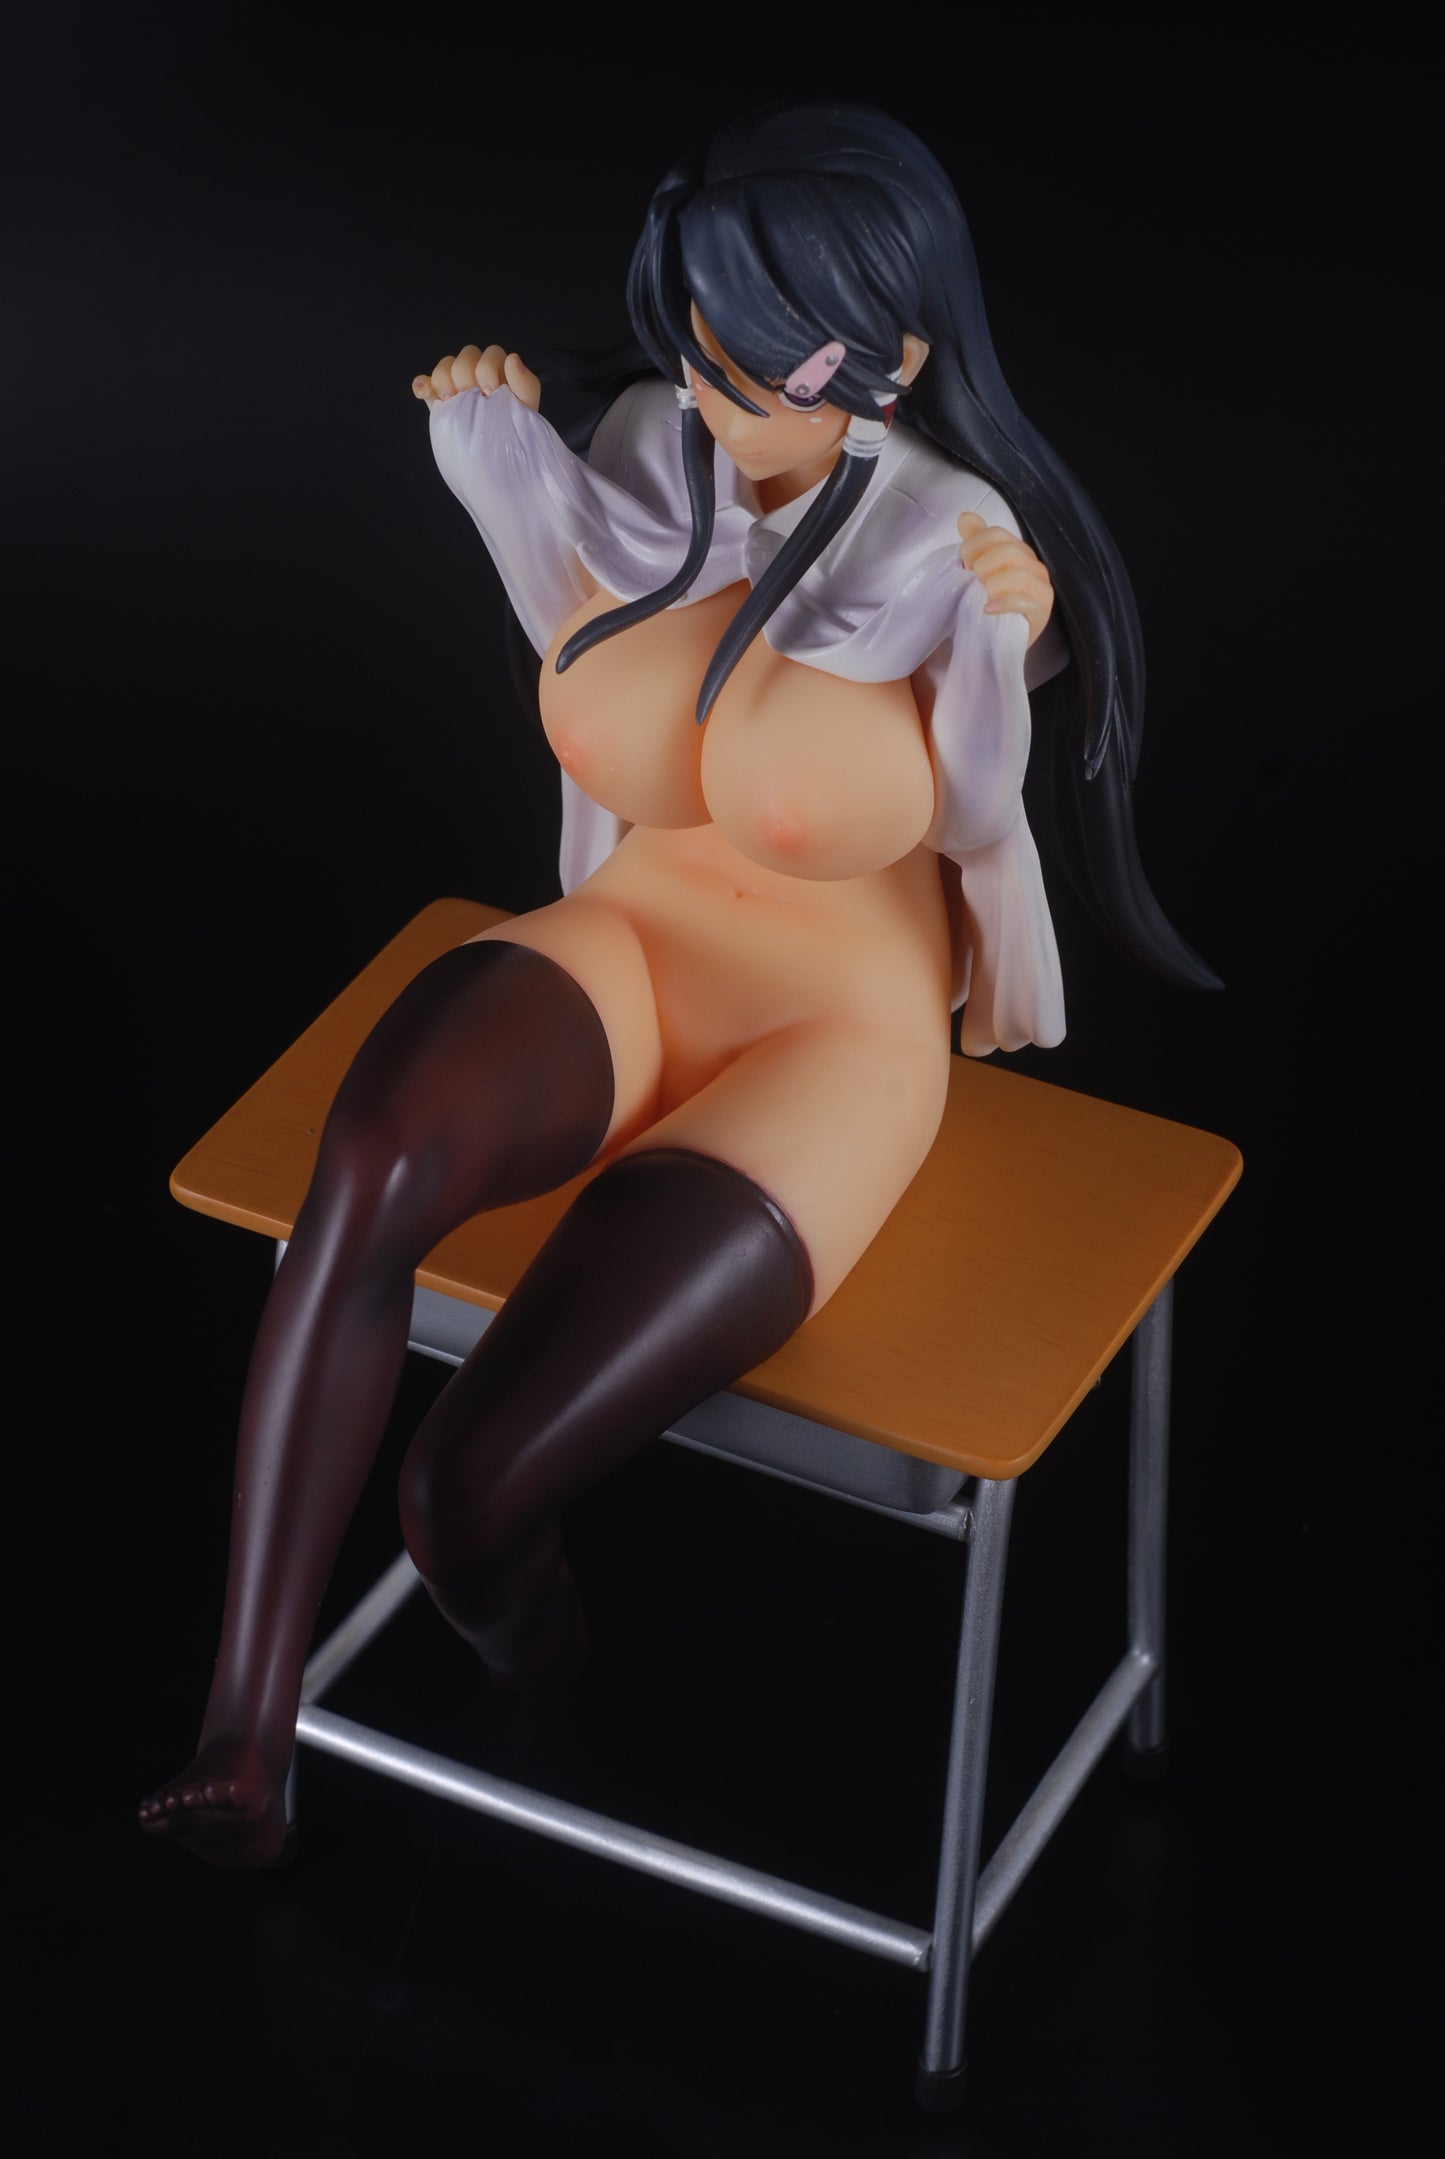 Hentai Figure - HHH Triple Ecchi / Takashima Shigure 1/6 naked anime figure sexy anime girl figure